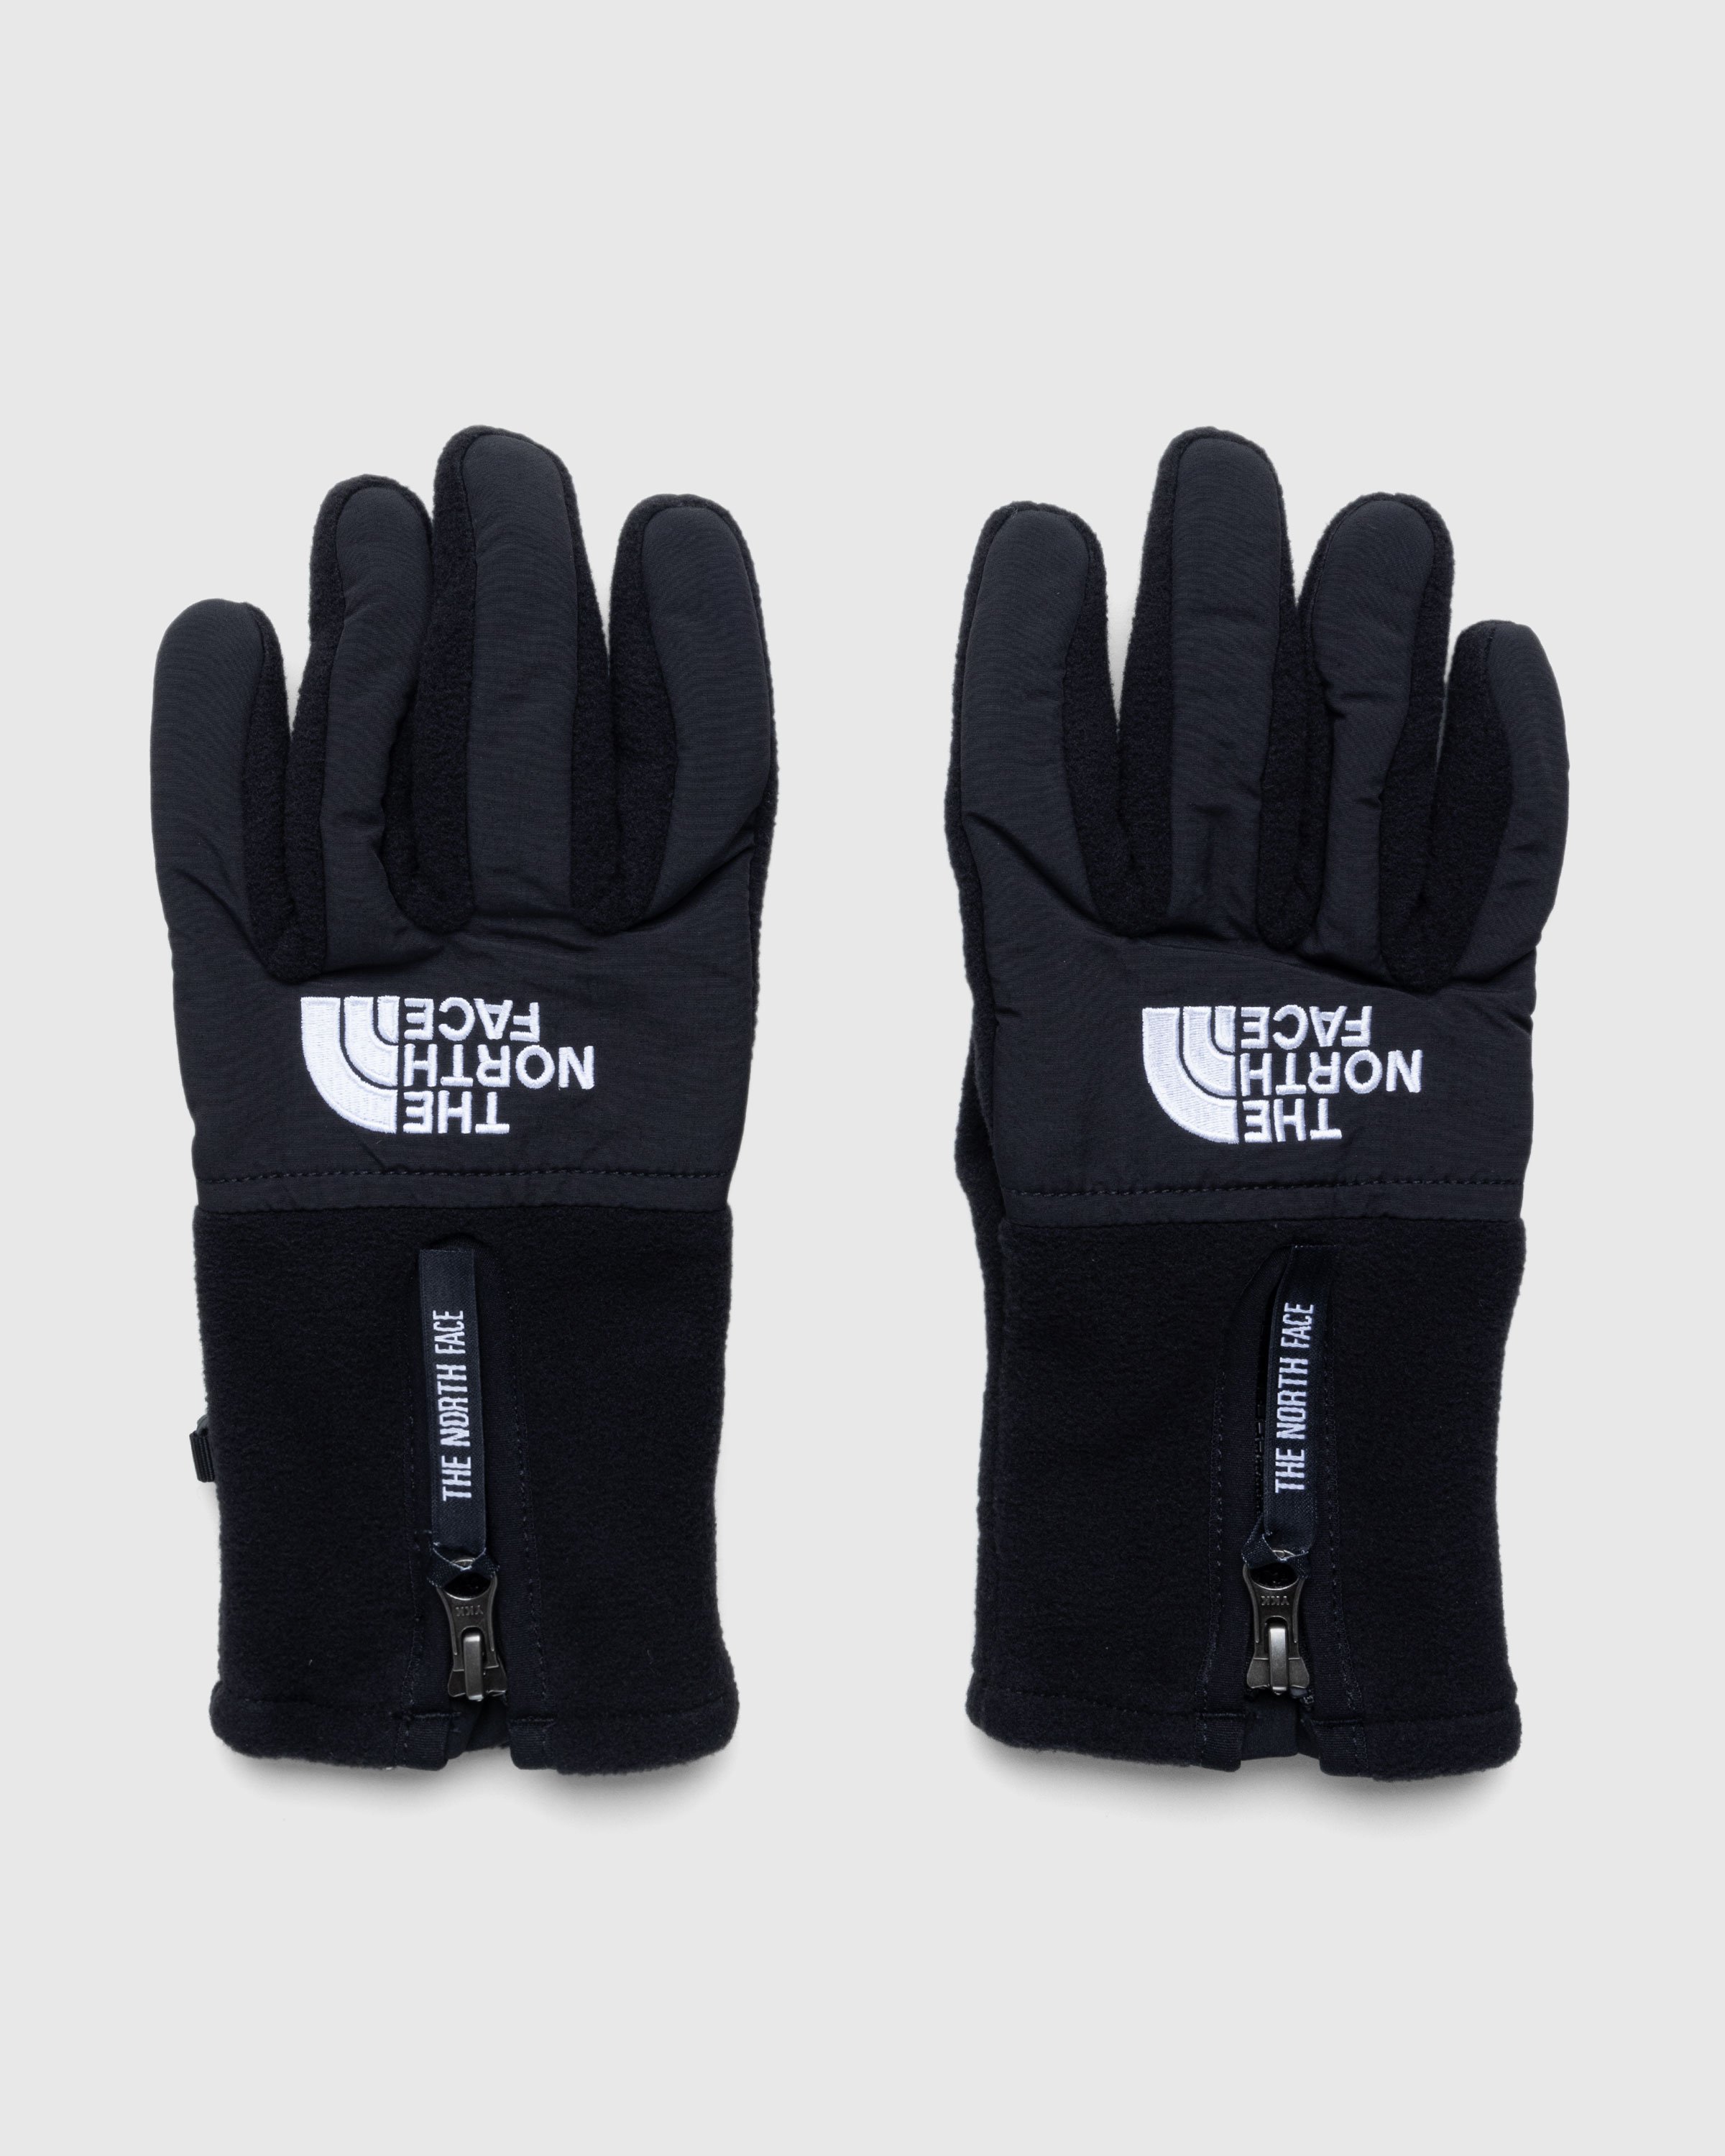 The North Face – Denali Etip Gloves TNF Black | Highsnobiety Shop